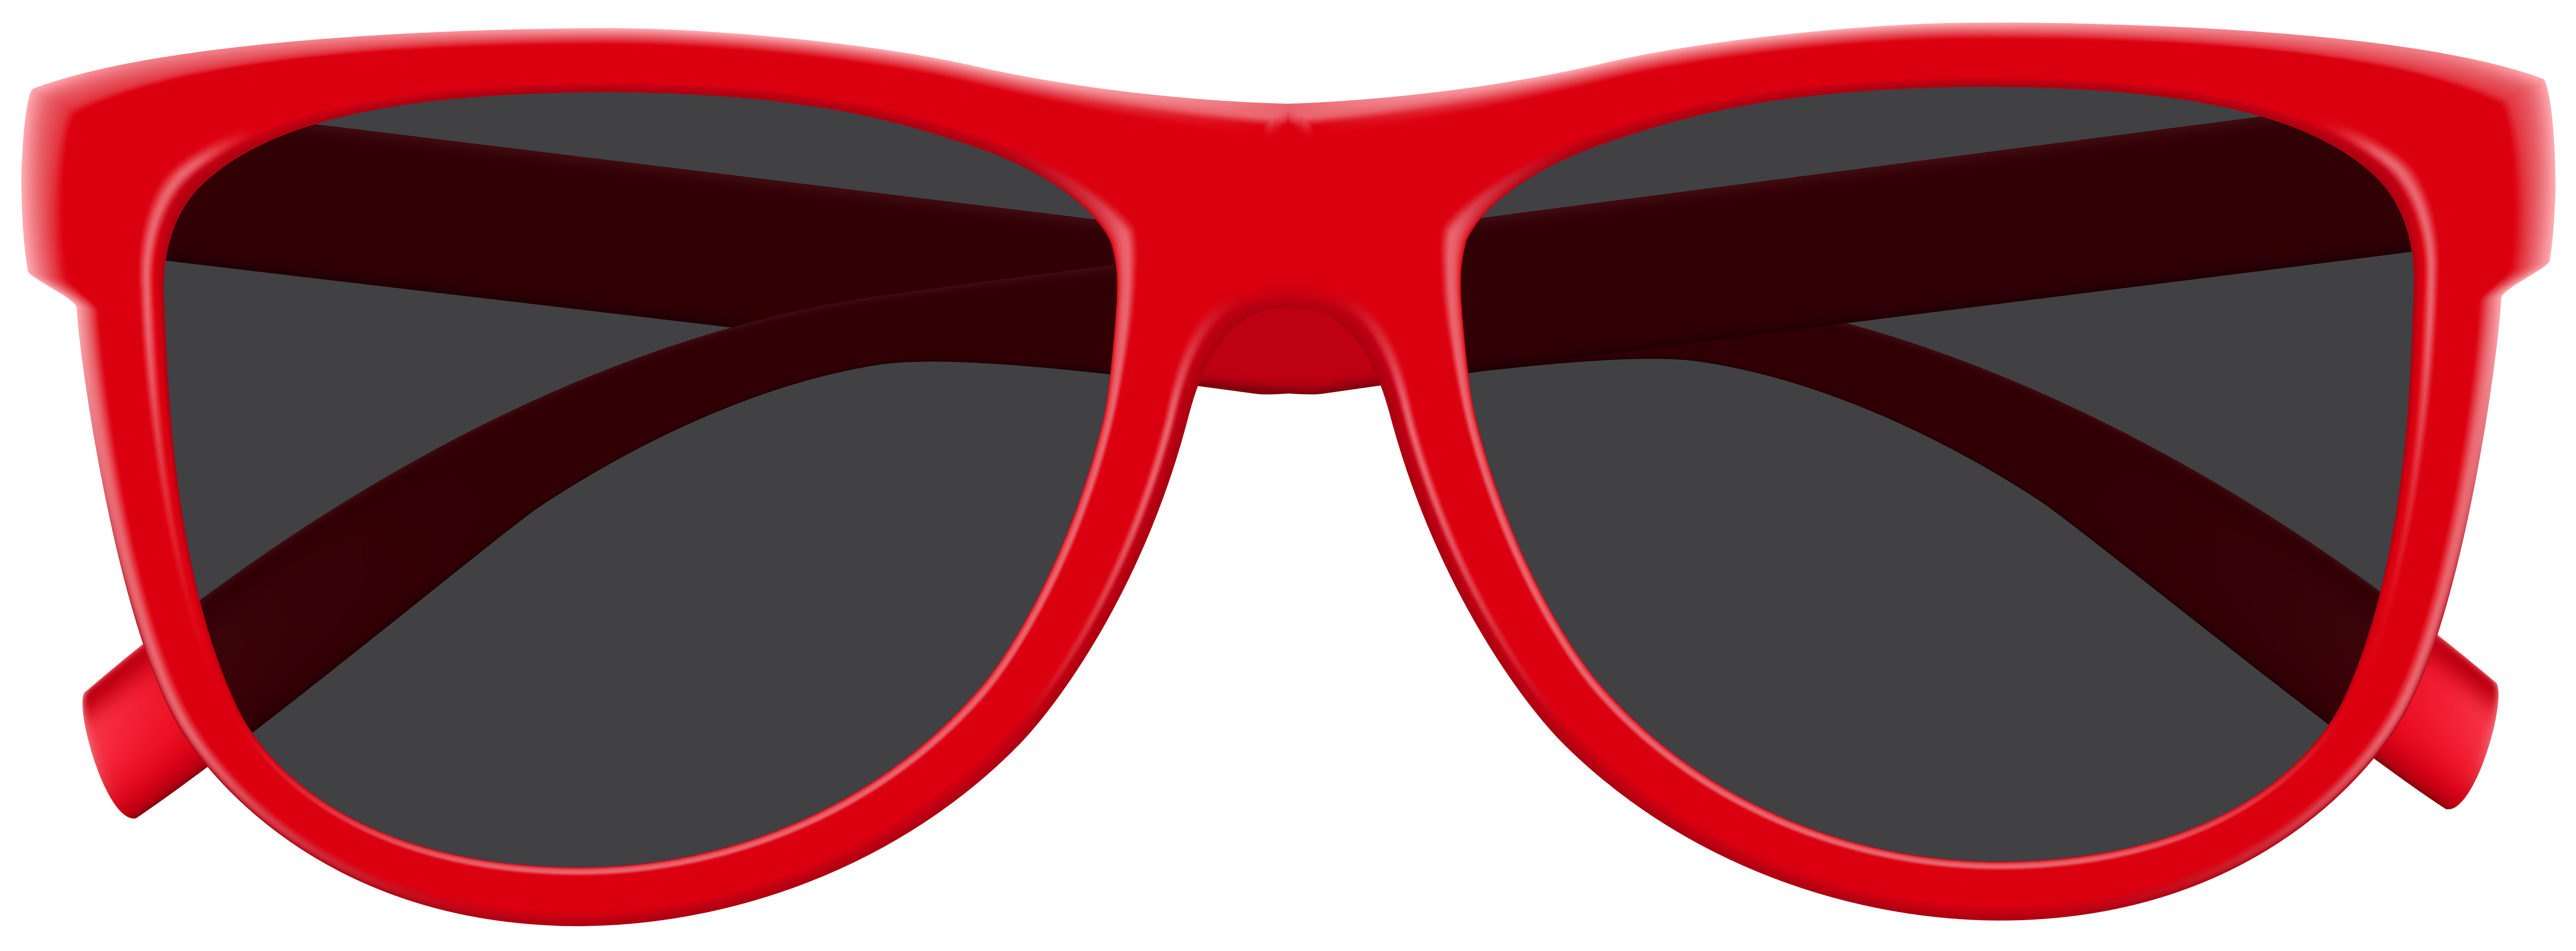 sunglasses clipart red white blue